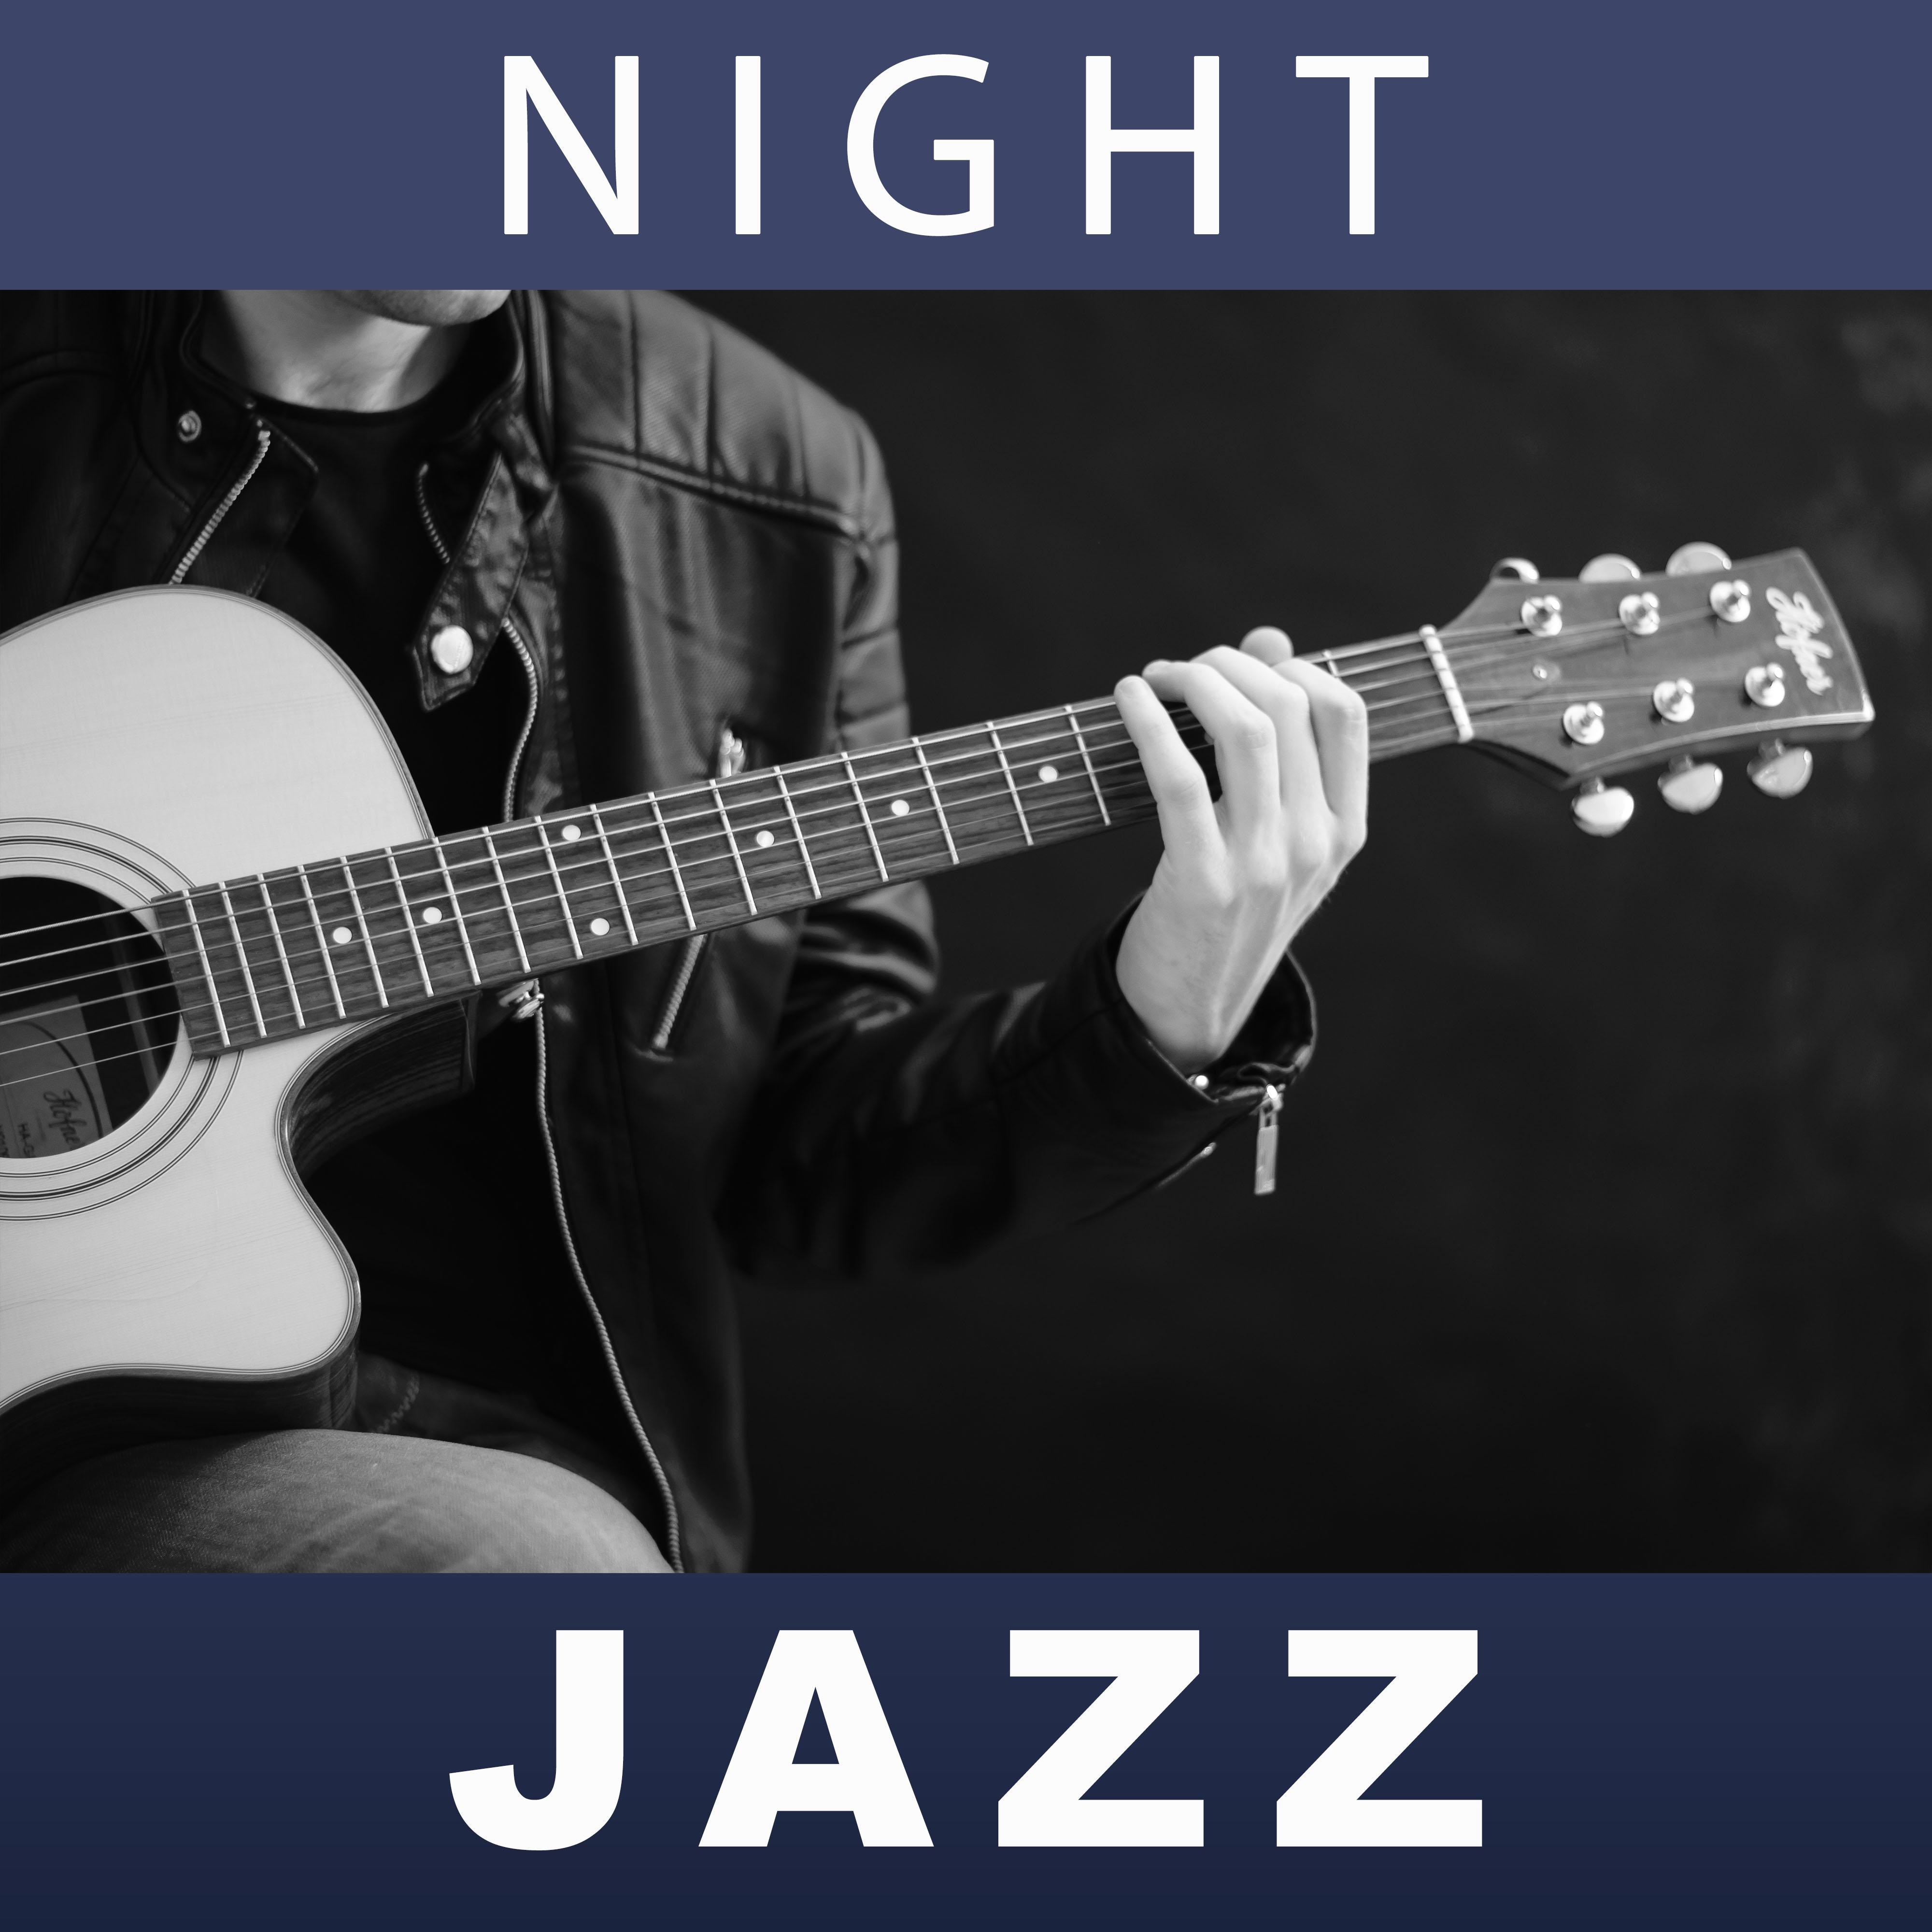 Night Jazz – Best Jazz Sounds, Night Guitar, Bohema Chilled Vibes, Restaurant Music, Background Sounds